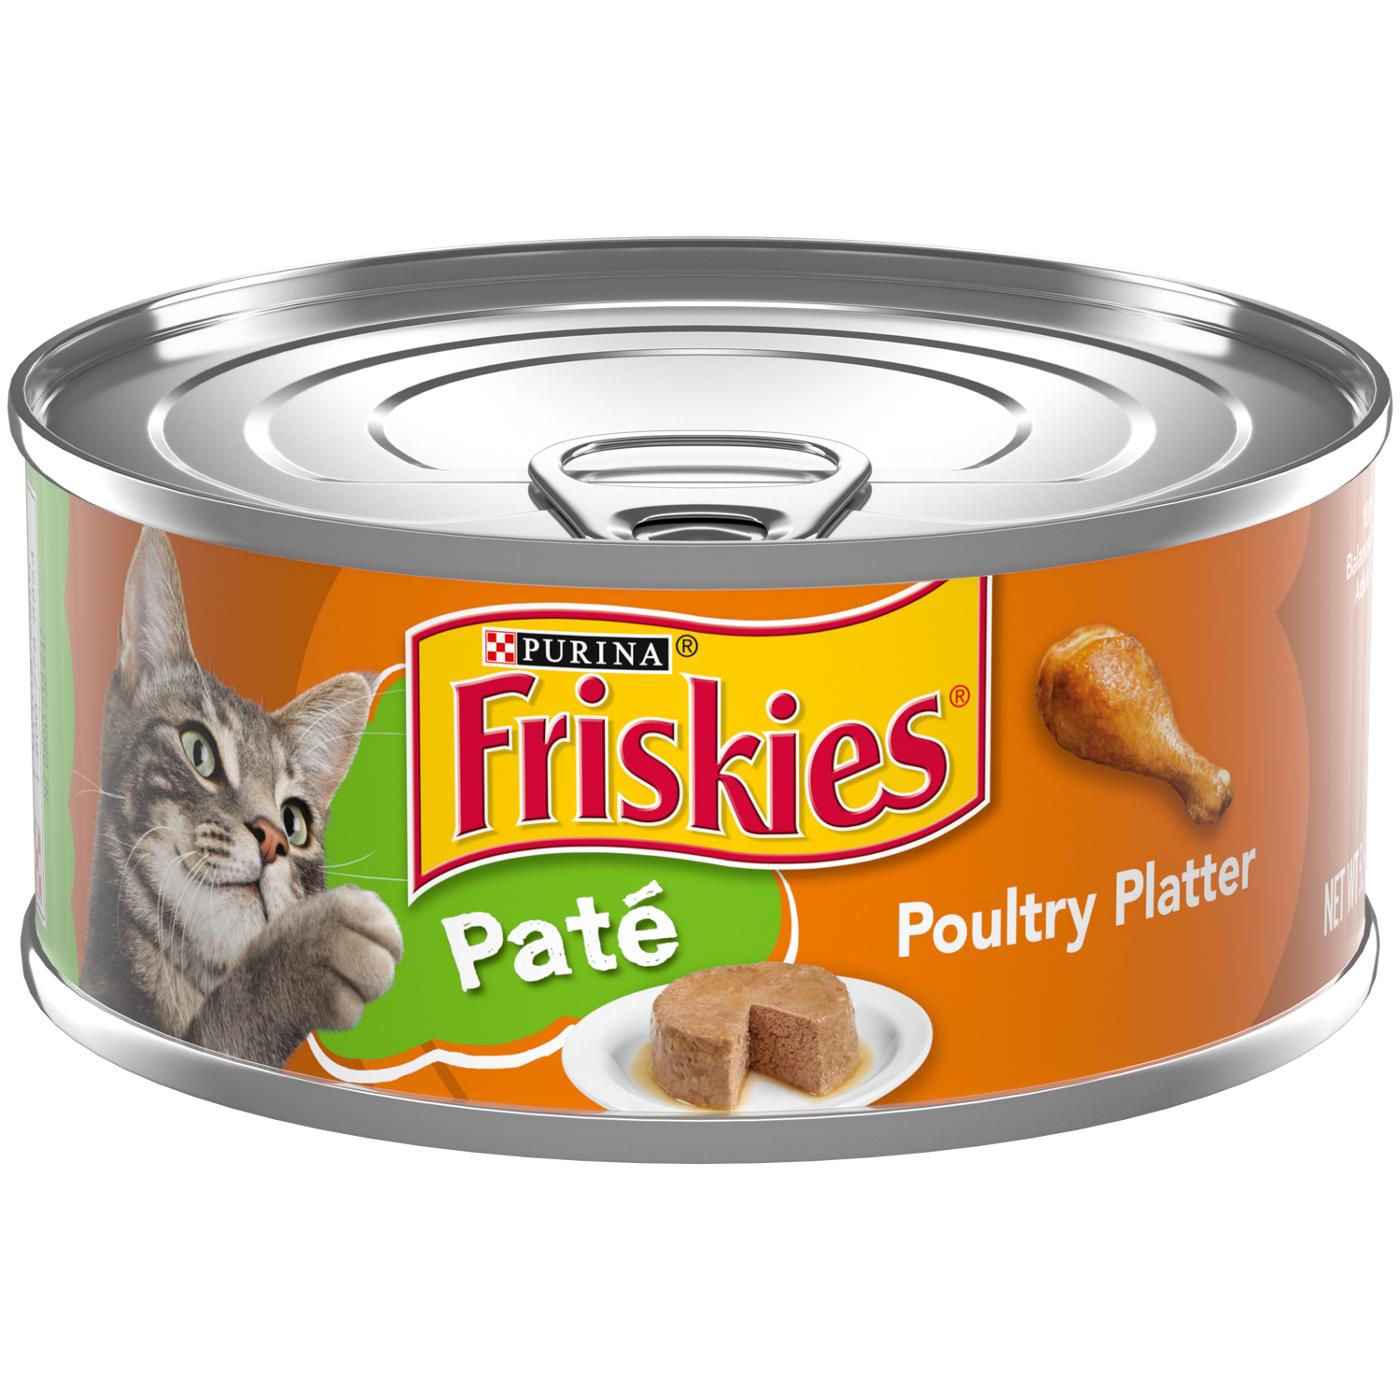 Friskies Pate Poultry Platter Wet Cat Food; image 1 of 8